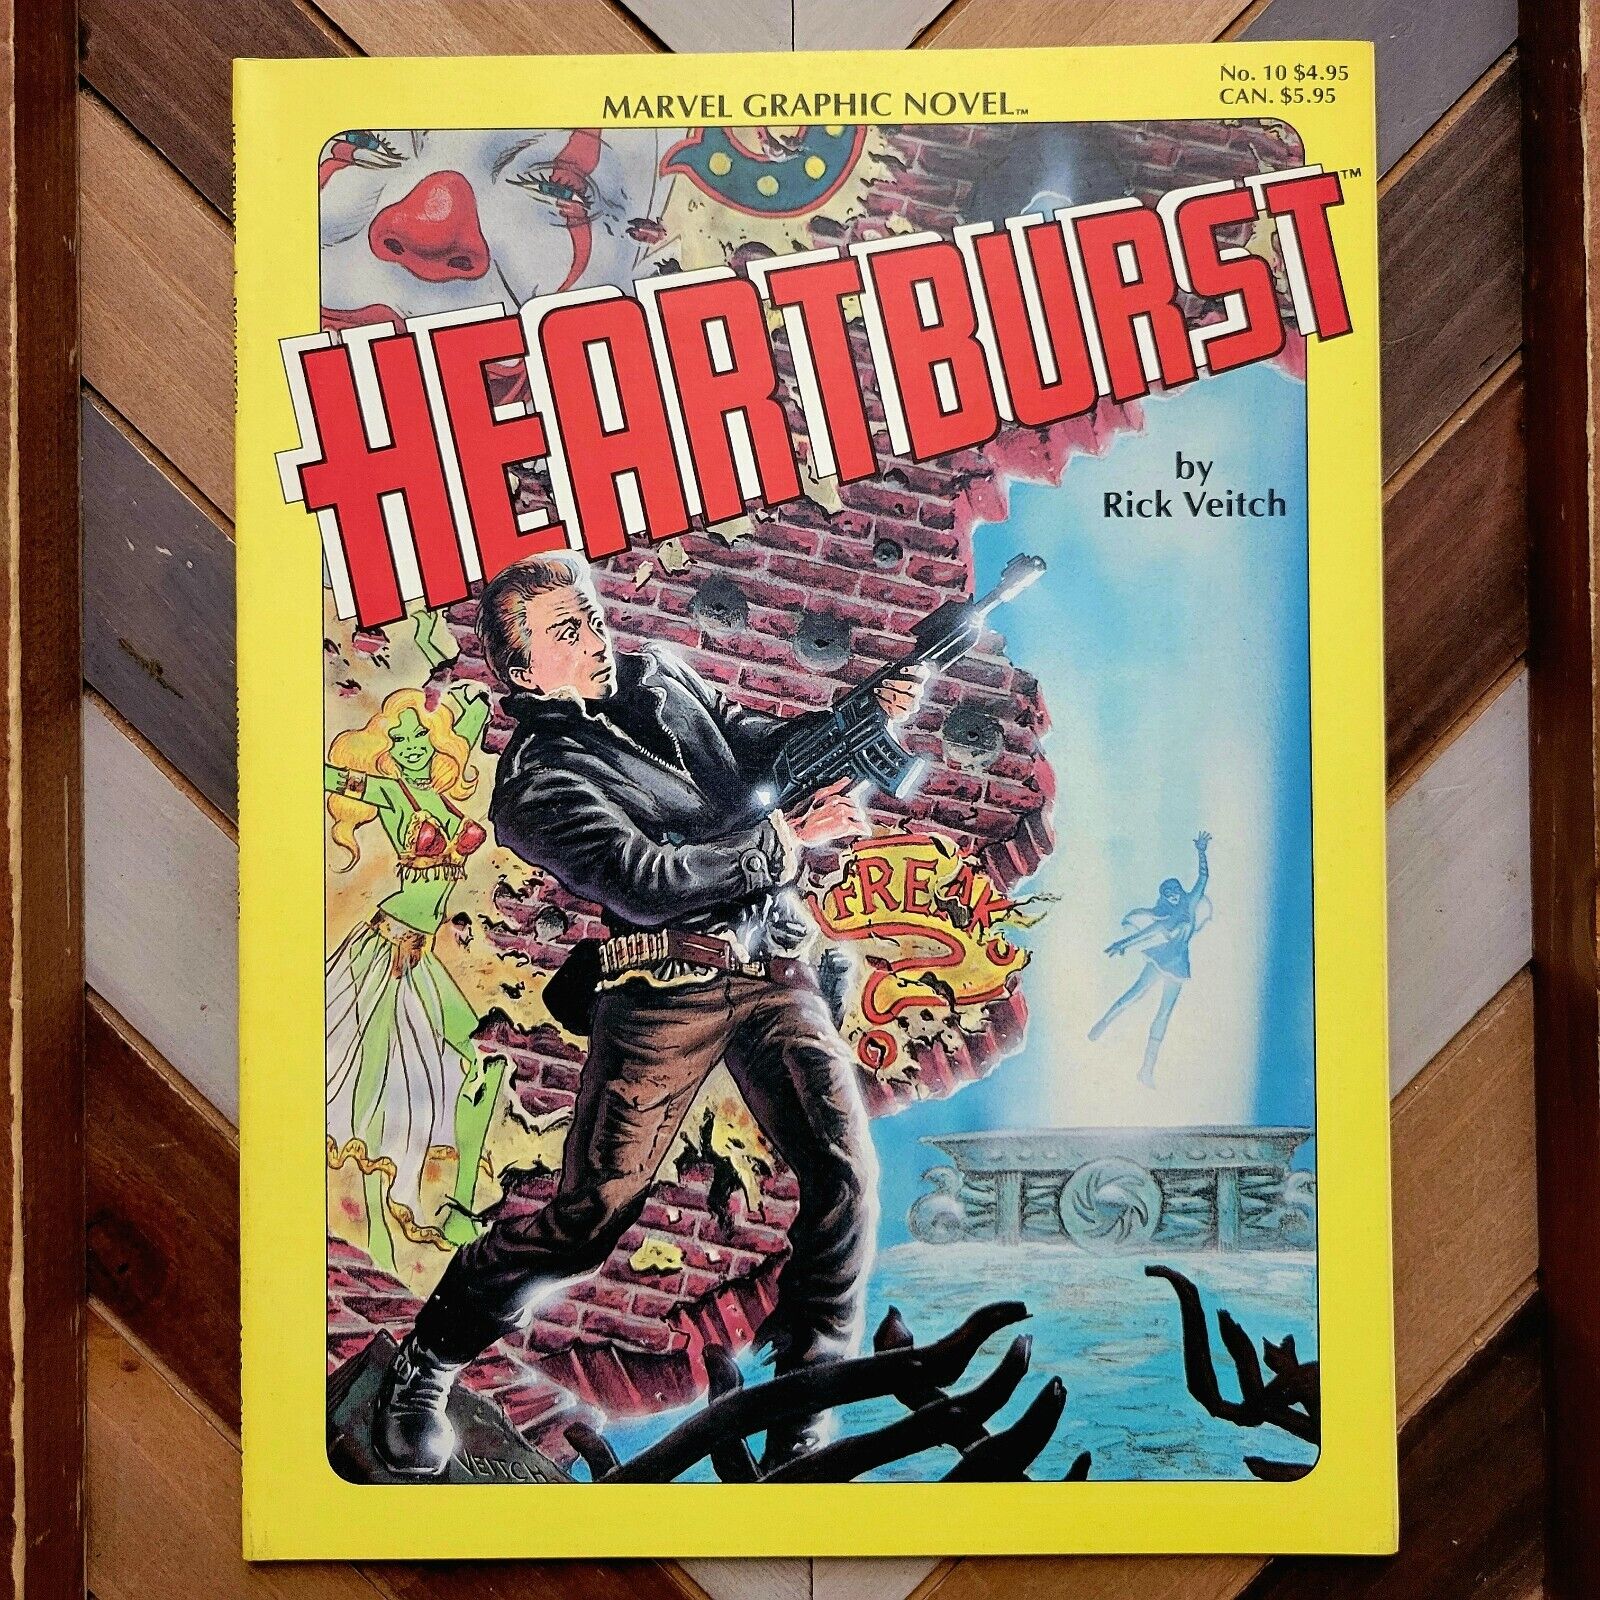 HEARTBURST Marvel Graphic Novel #10 VF- (1984) 1st Print by RICK VEITCH 